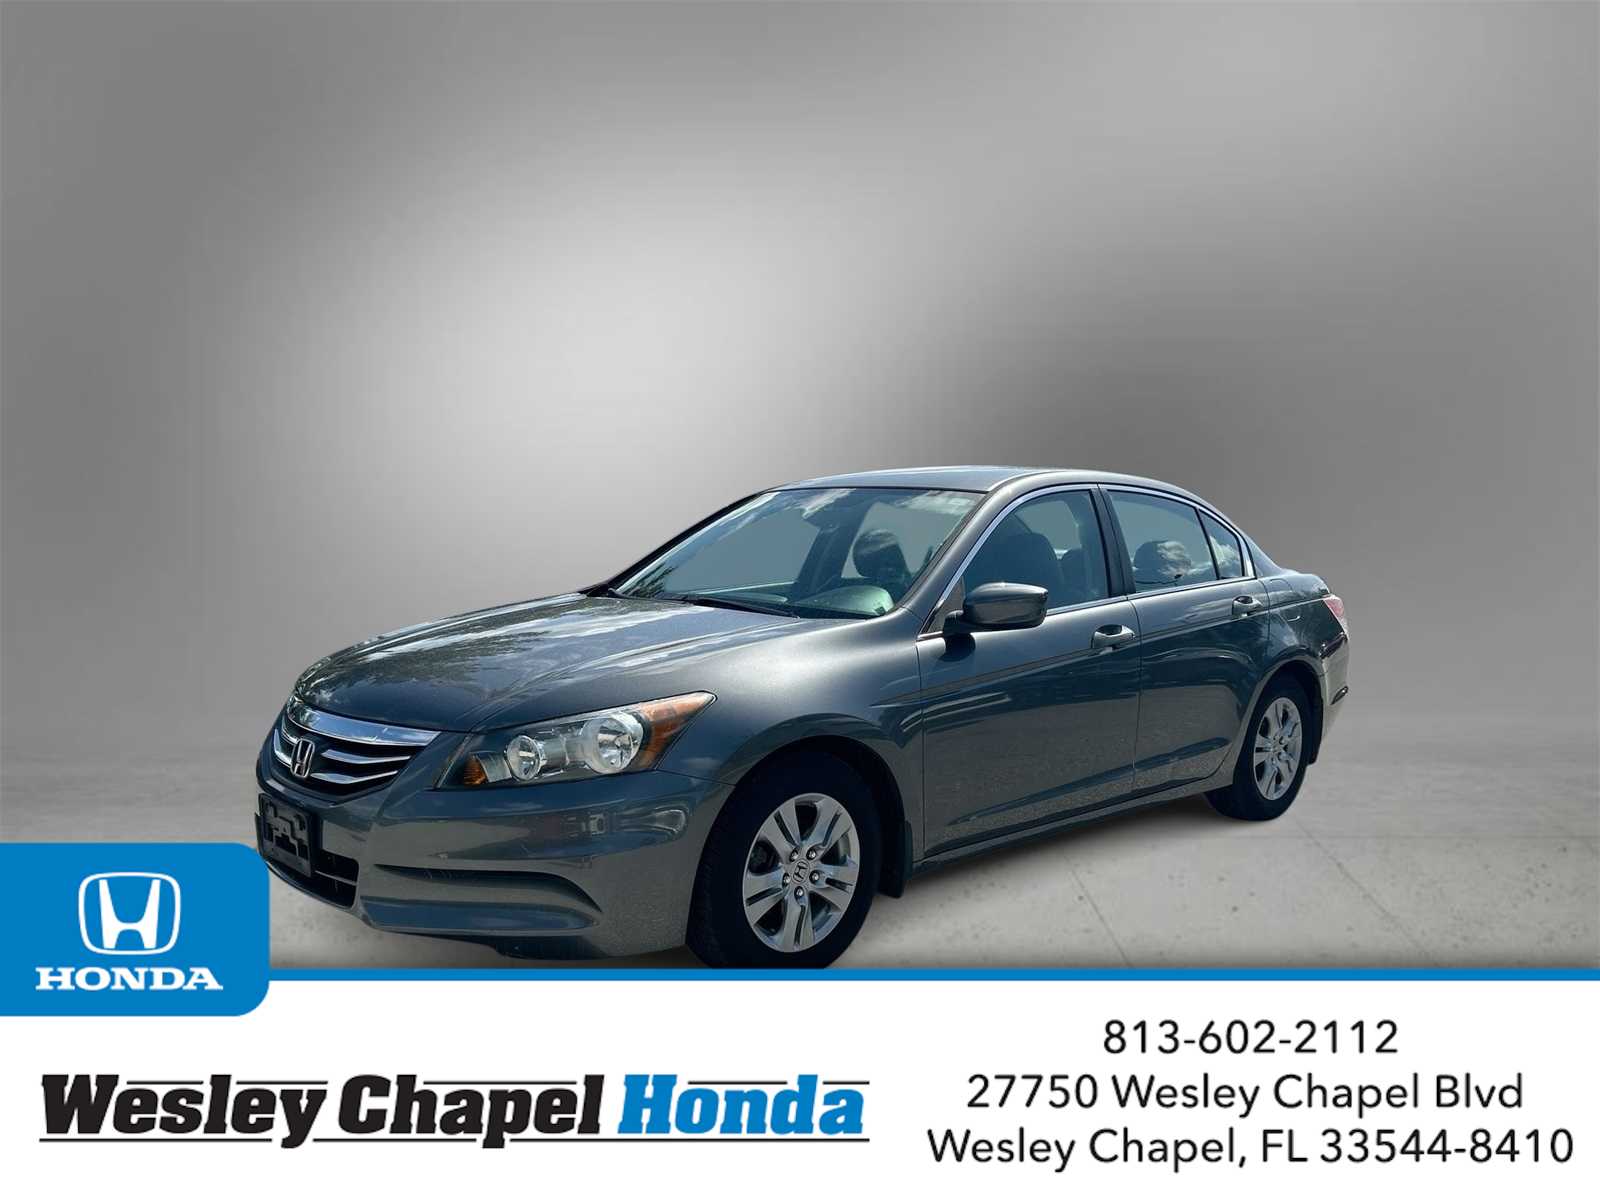 2012 Honda Accord SE -
                Wesley Chapel, FL